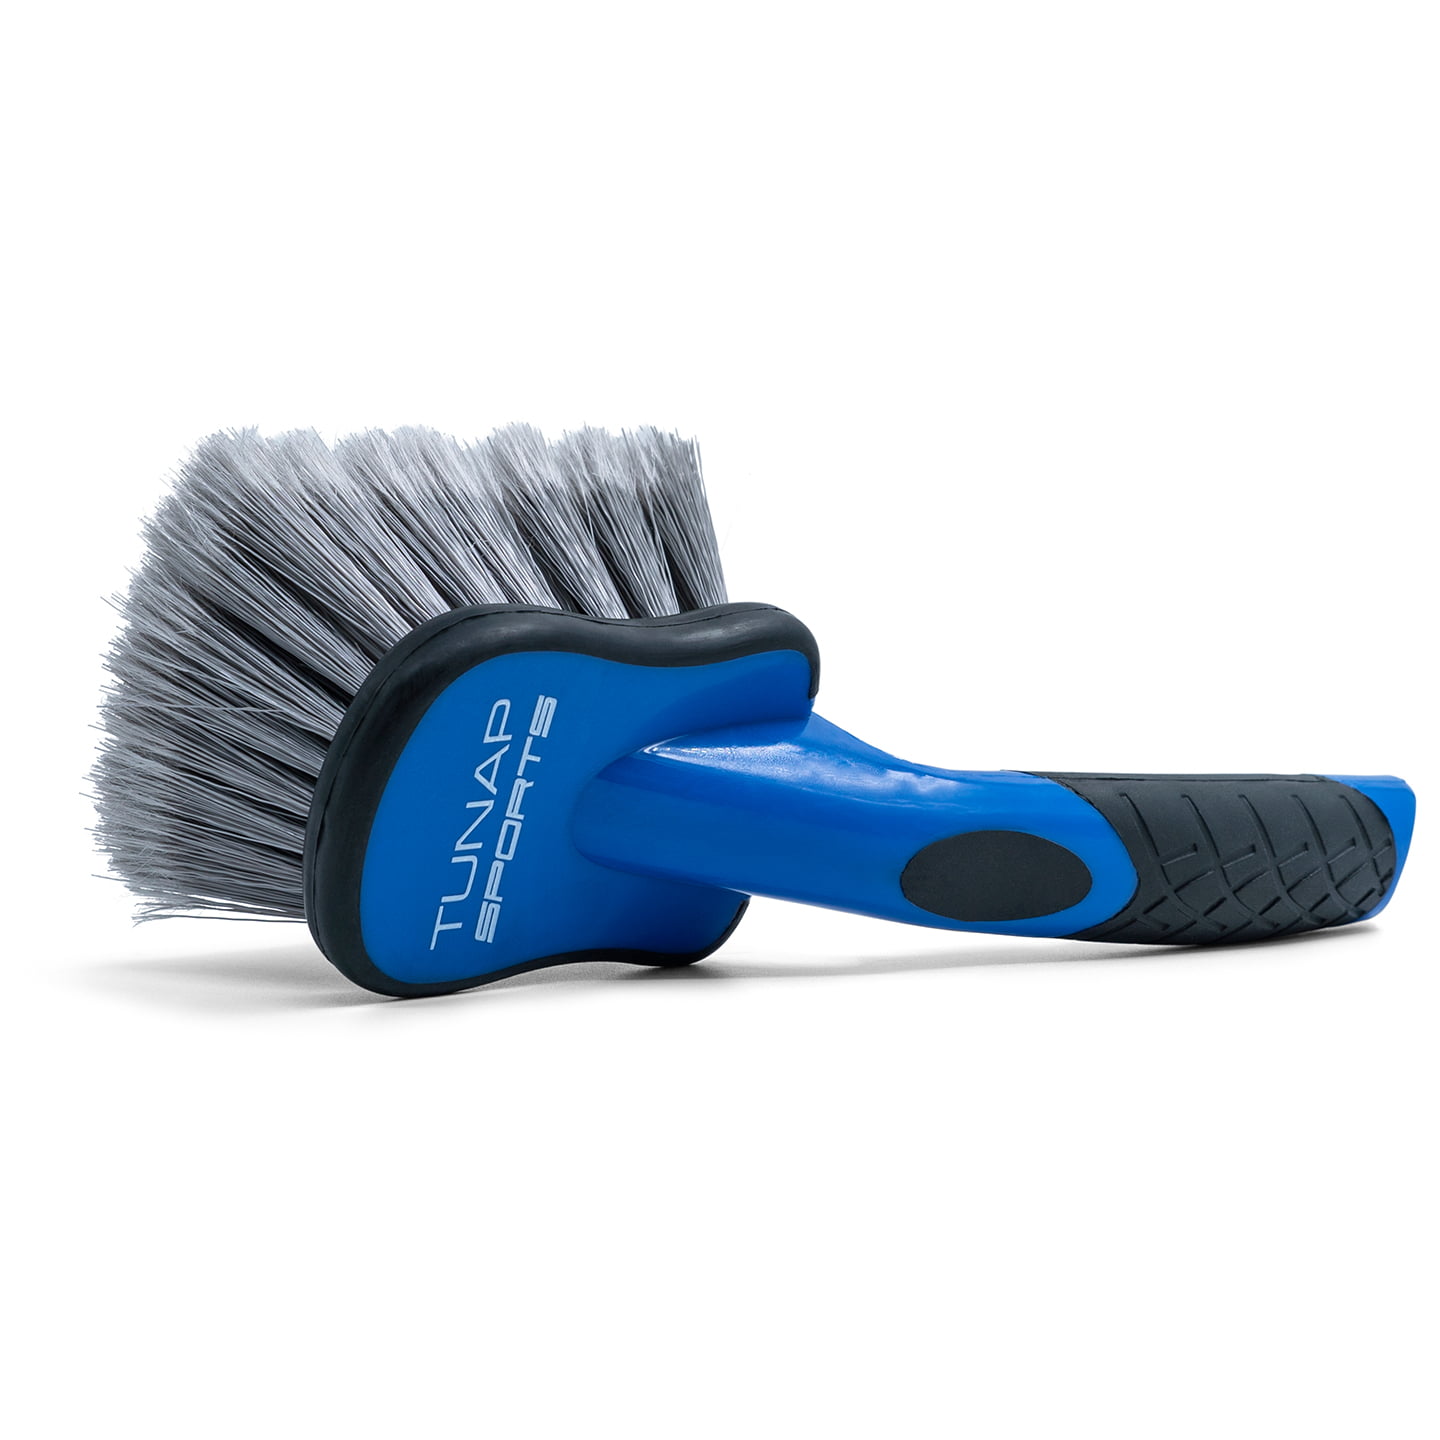 TUNAP SPORTS Pro Cleaning Brush, Bike accessories